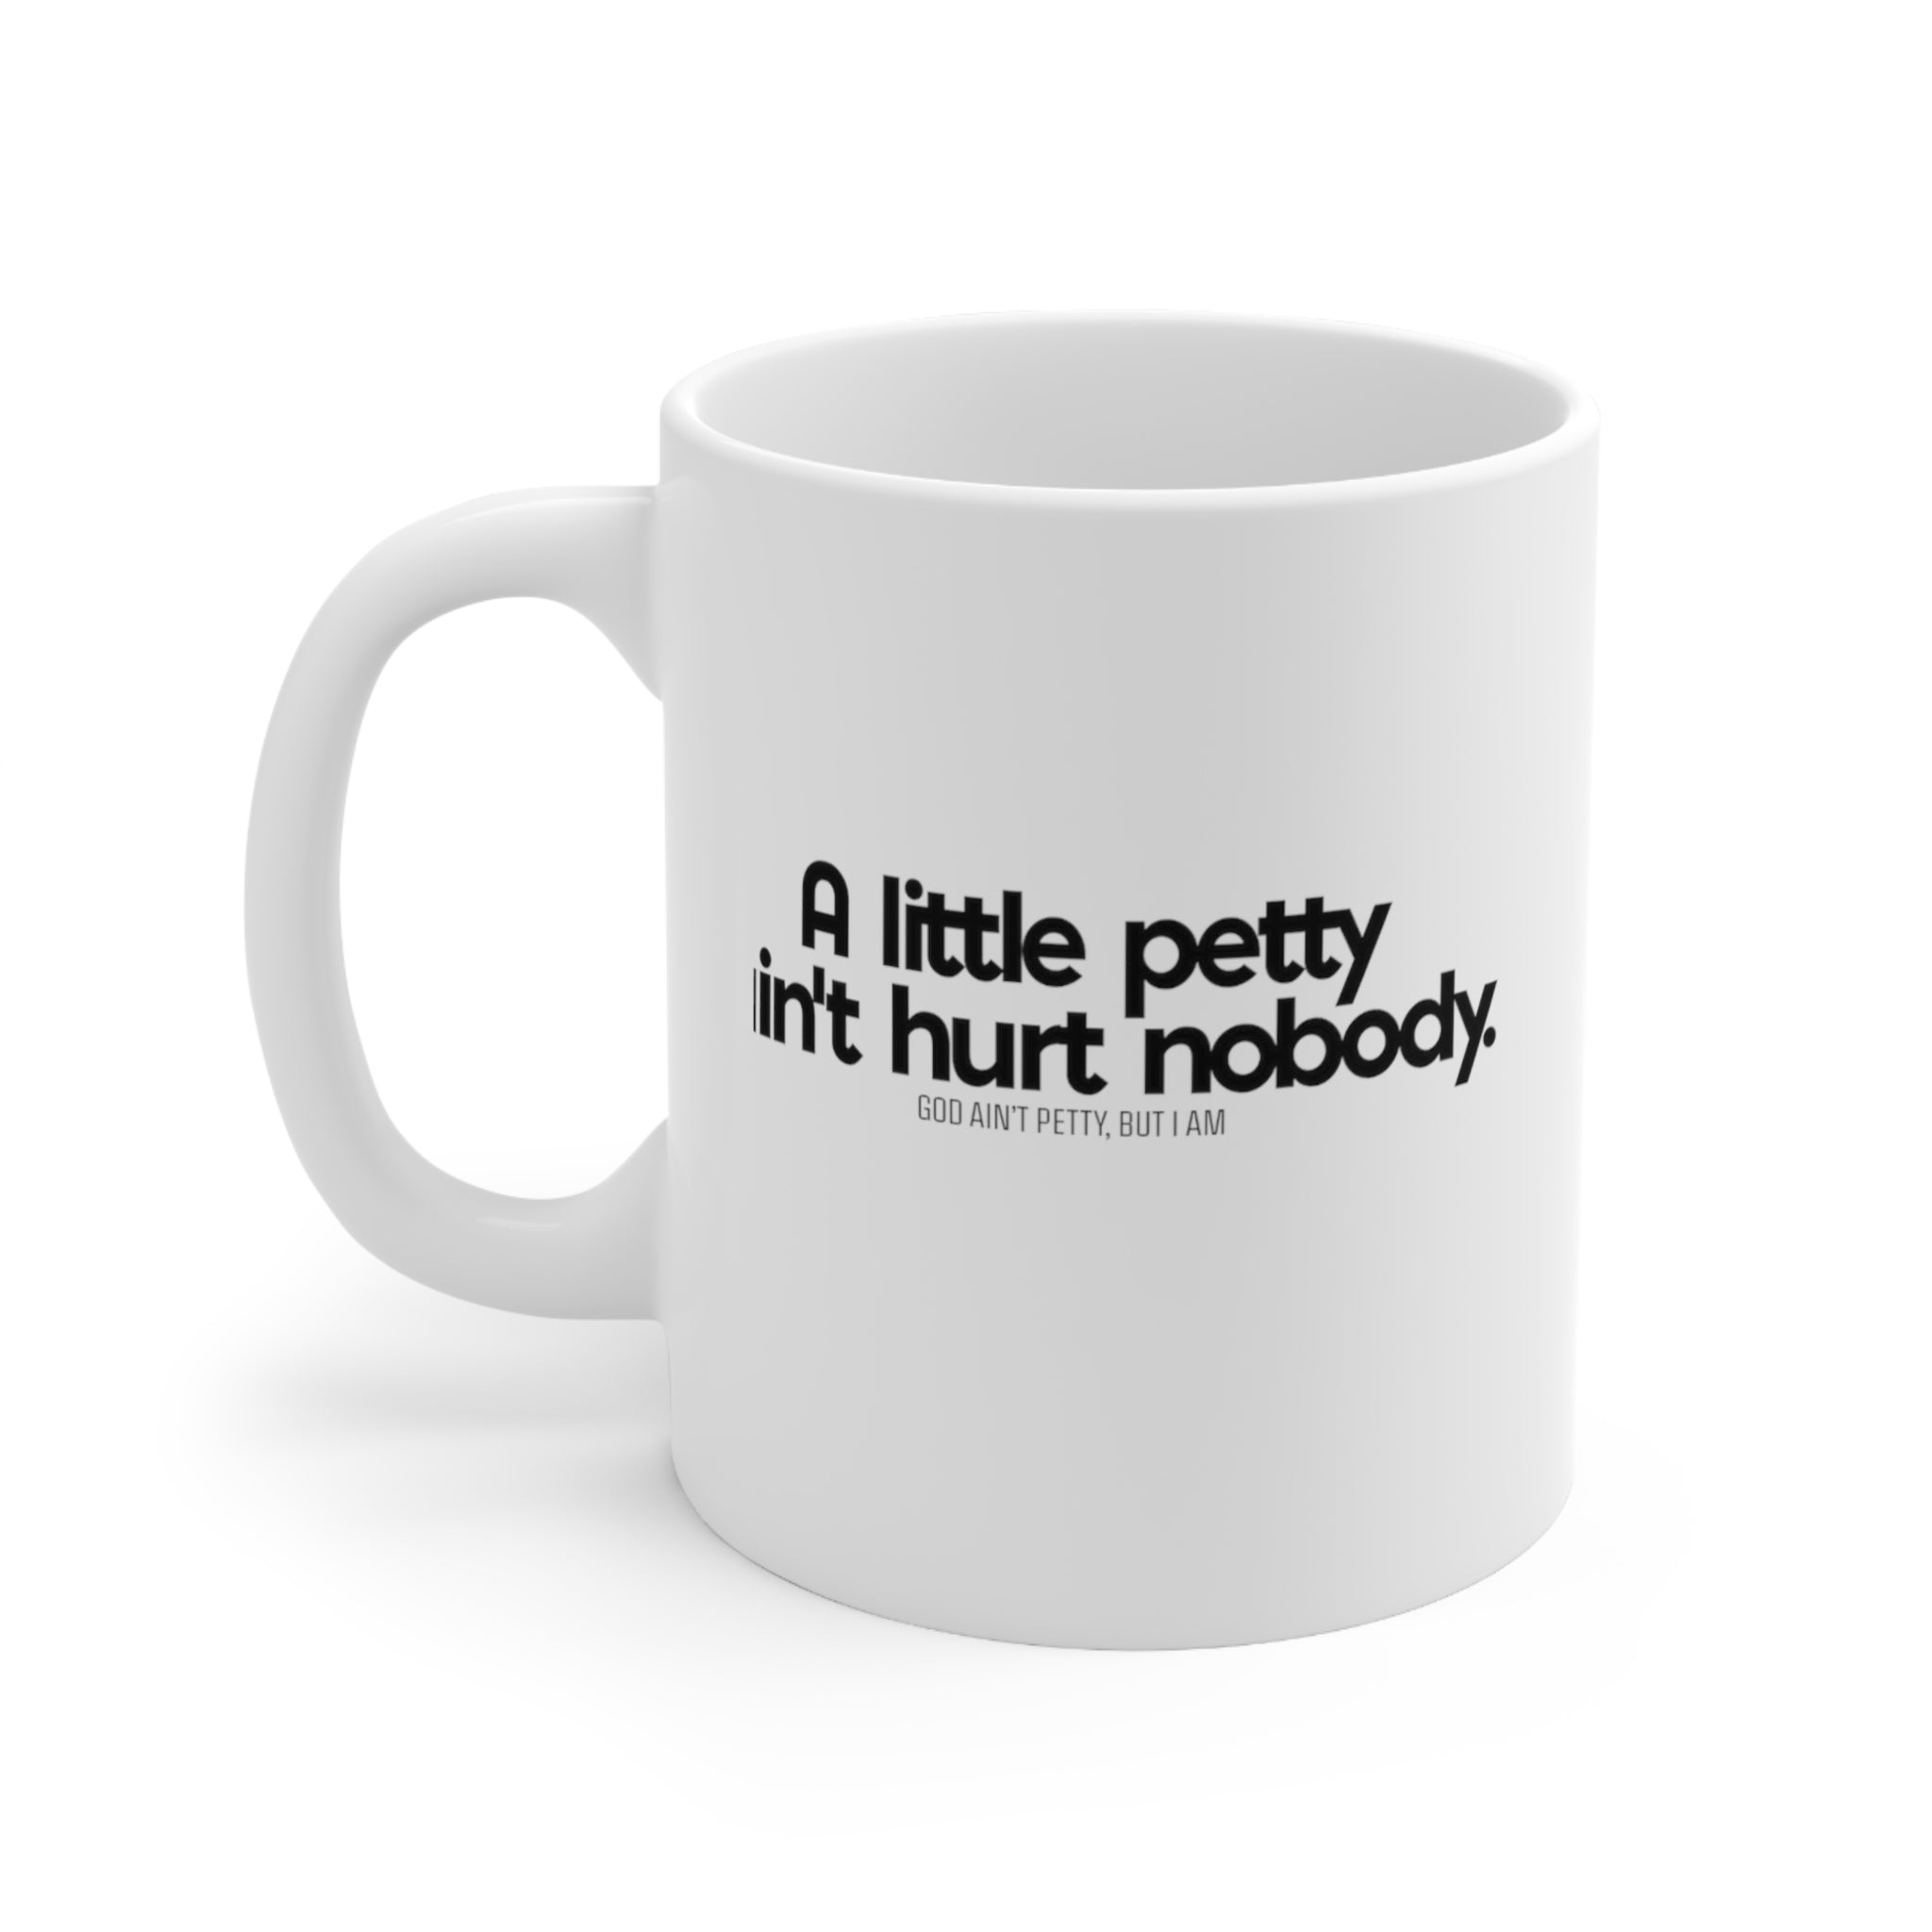 A little petty ain't hurt Mug 11oz (White/Black)-Mug-The Original God Ain't Petty But I Am